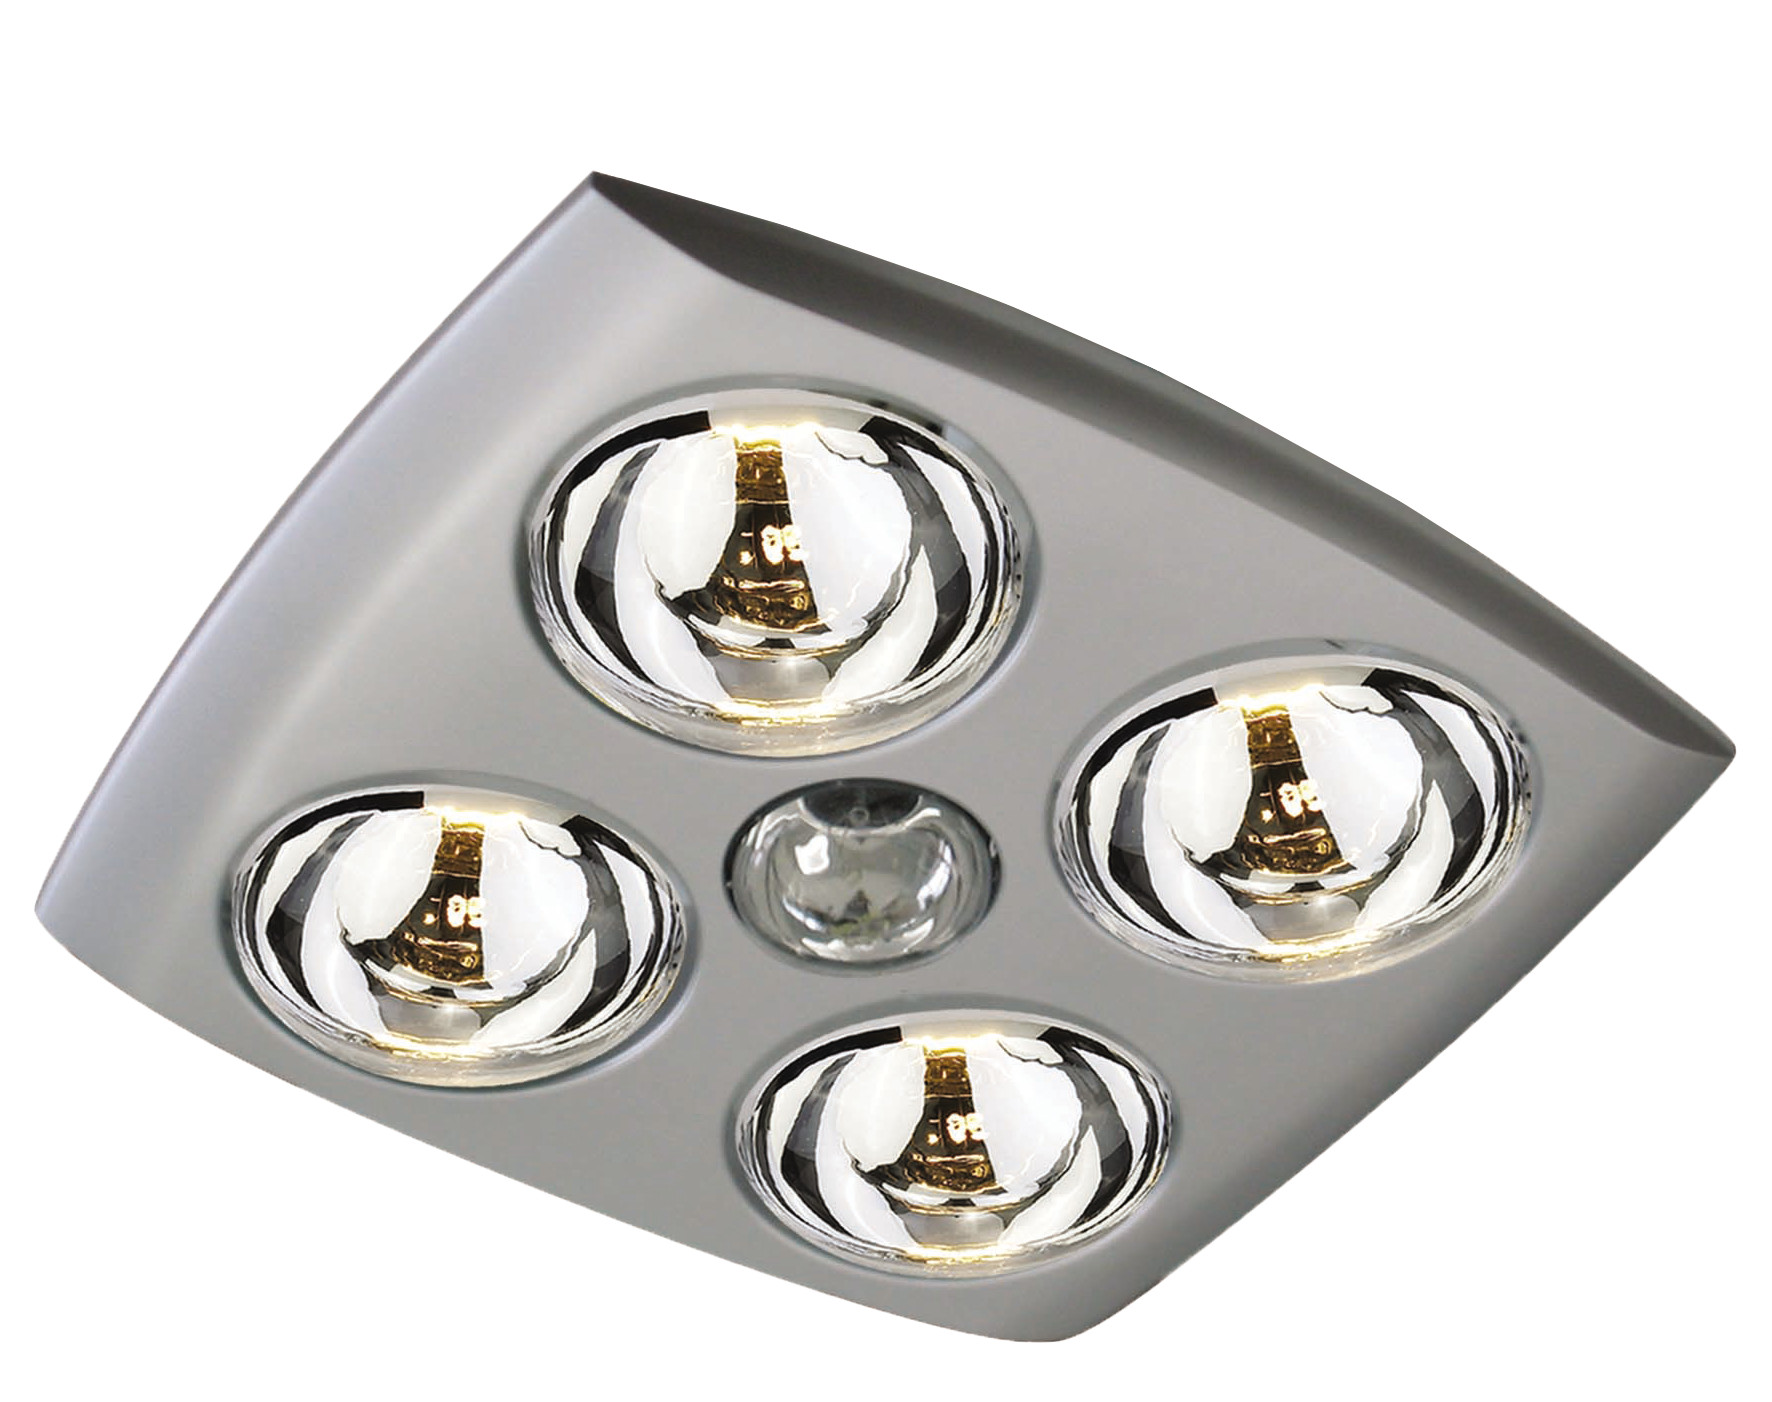 Heating Light Bulbs For Bathroom
 Bathroom ceiling heat lamps – Lighting and Ceiling Fans